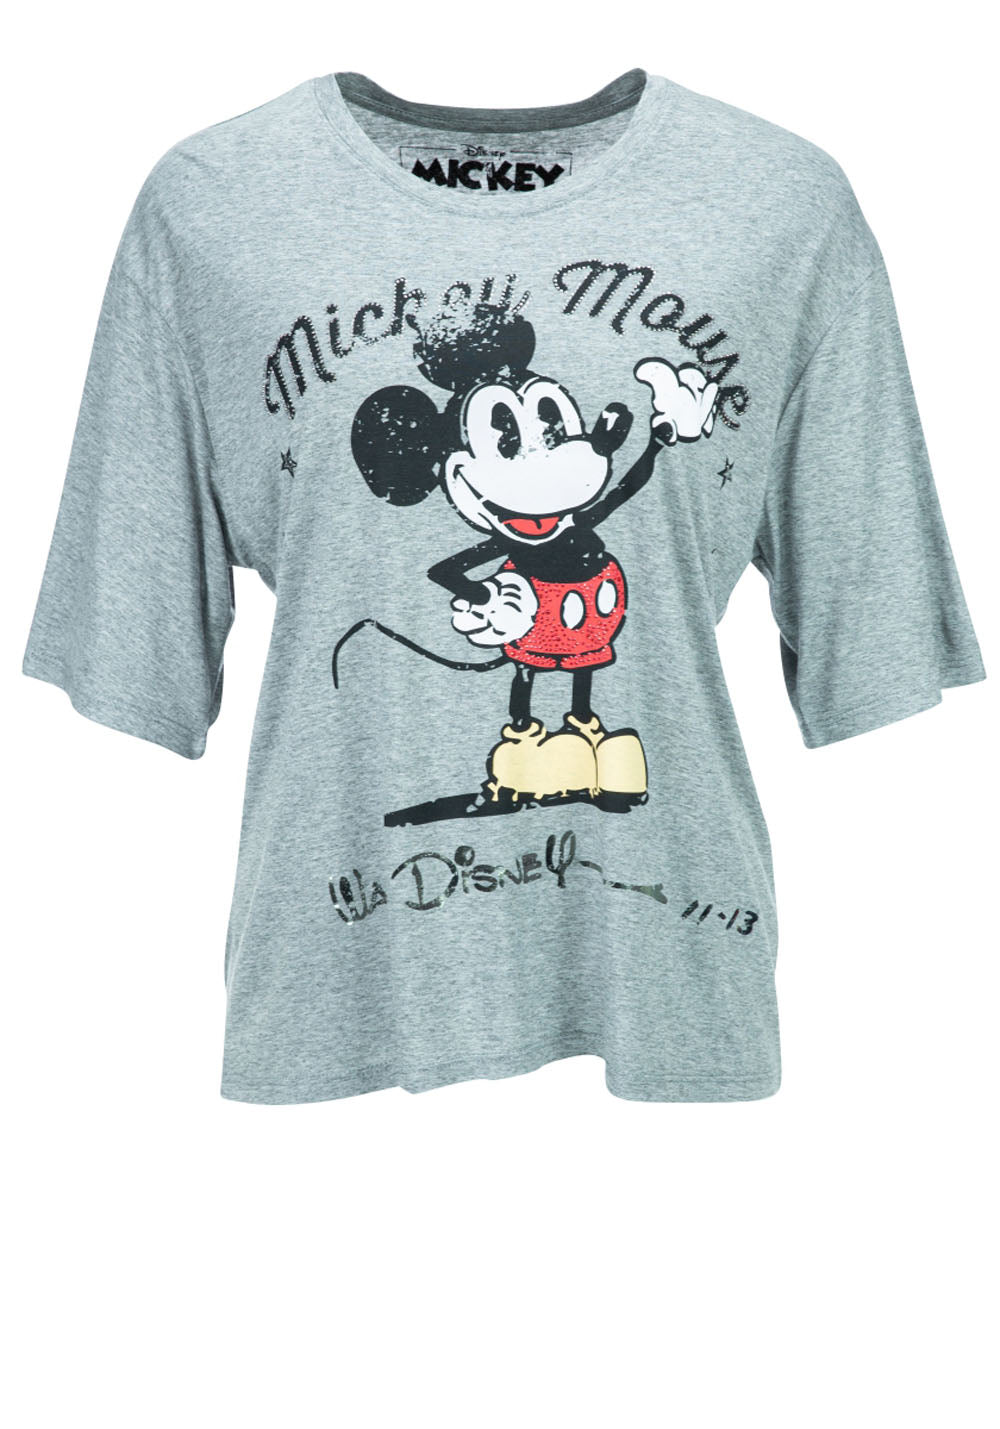 Vintage Look Mickey Tee